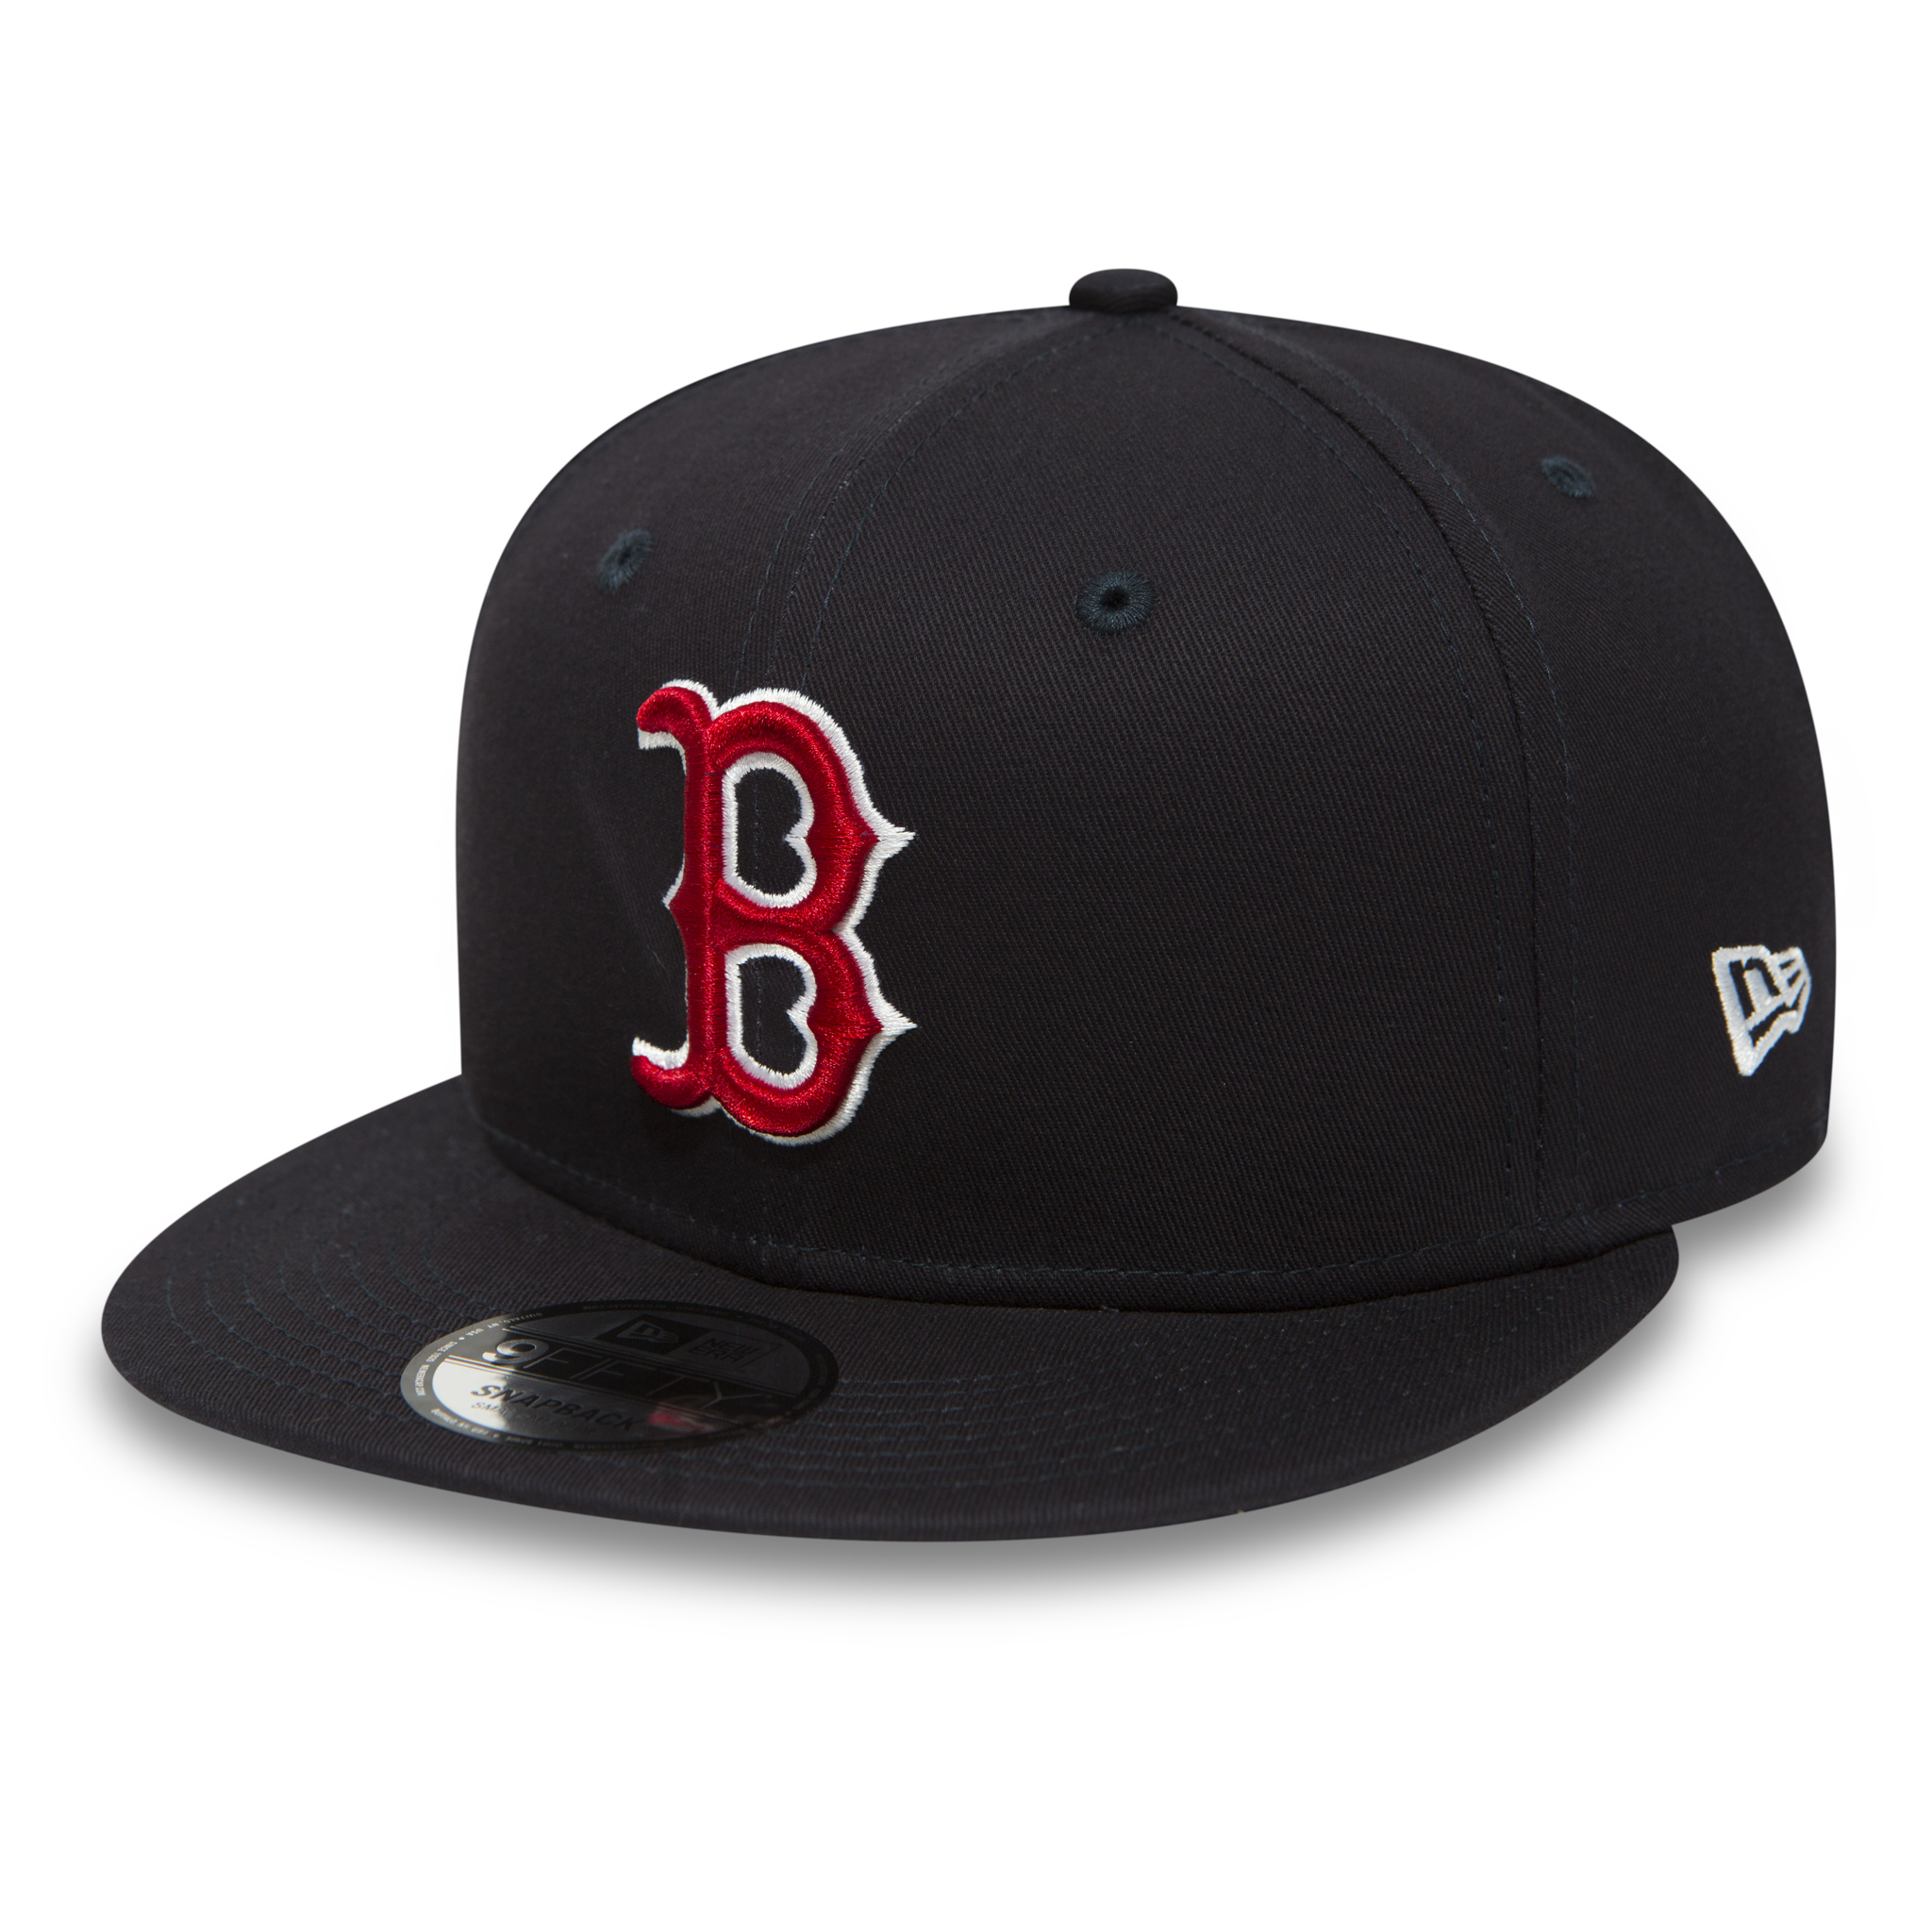 Gorra New Era Boston Red Sox Essential 9FIFTY Snapback Azul Marino